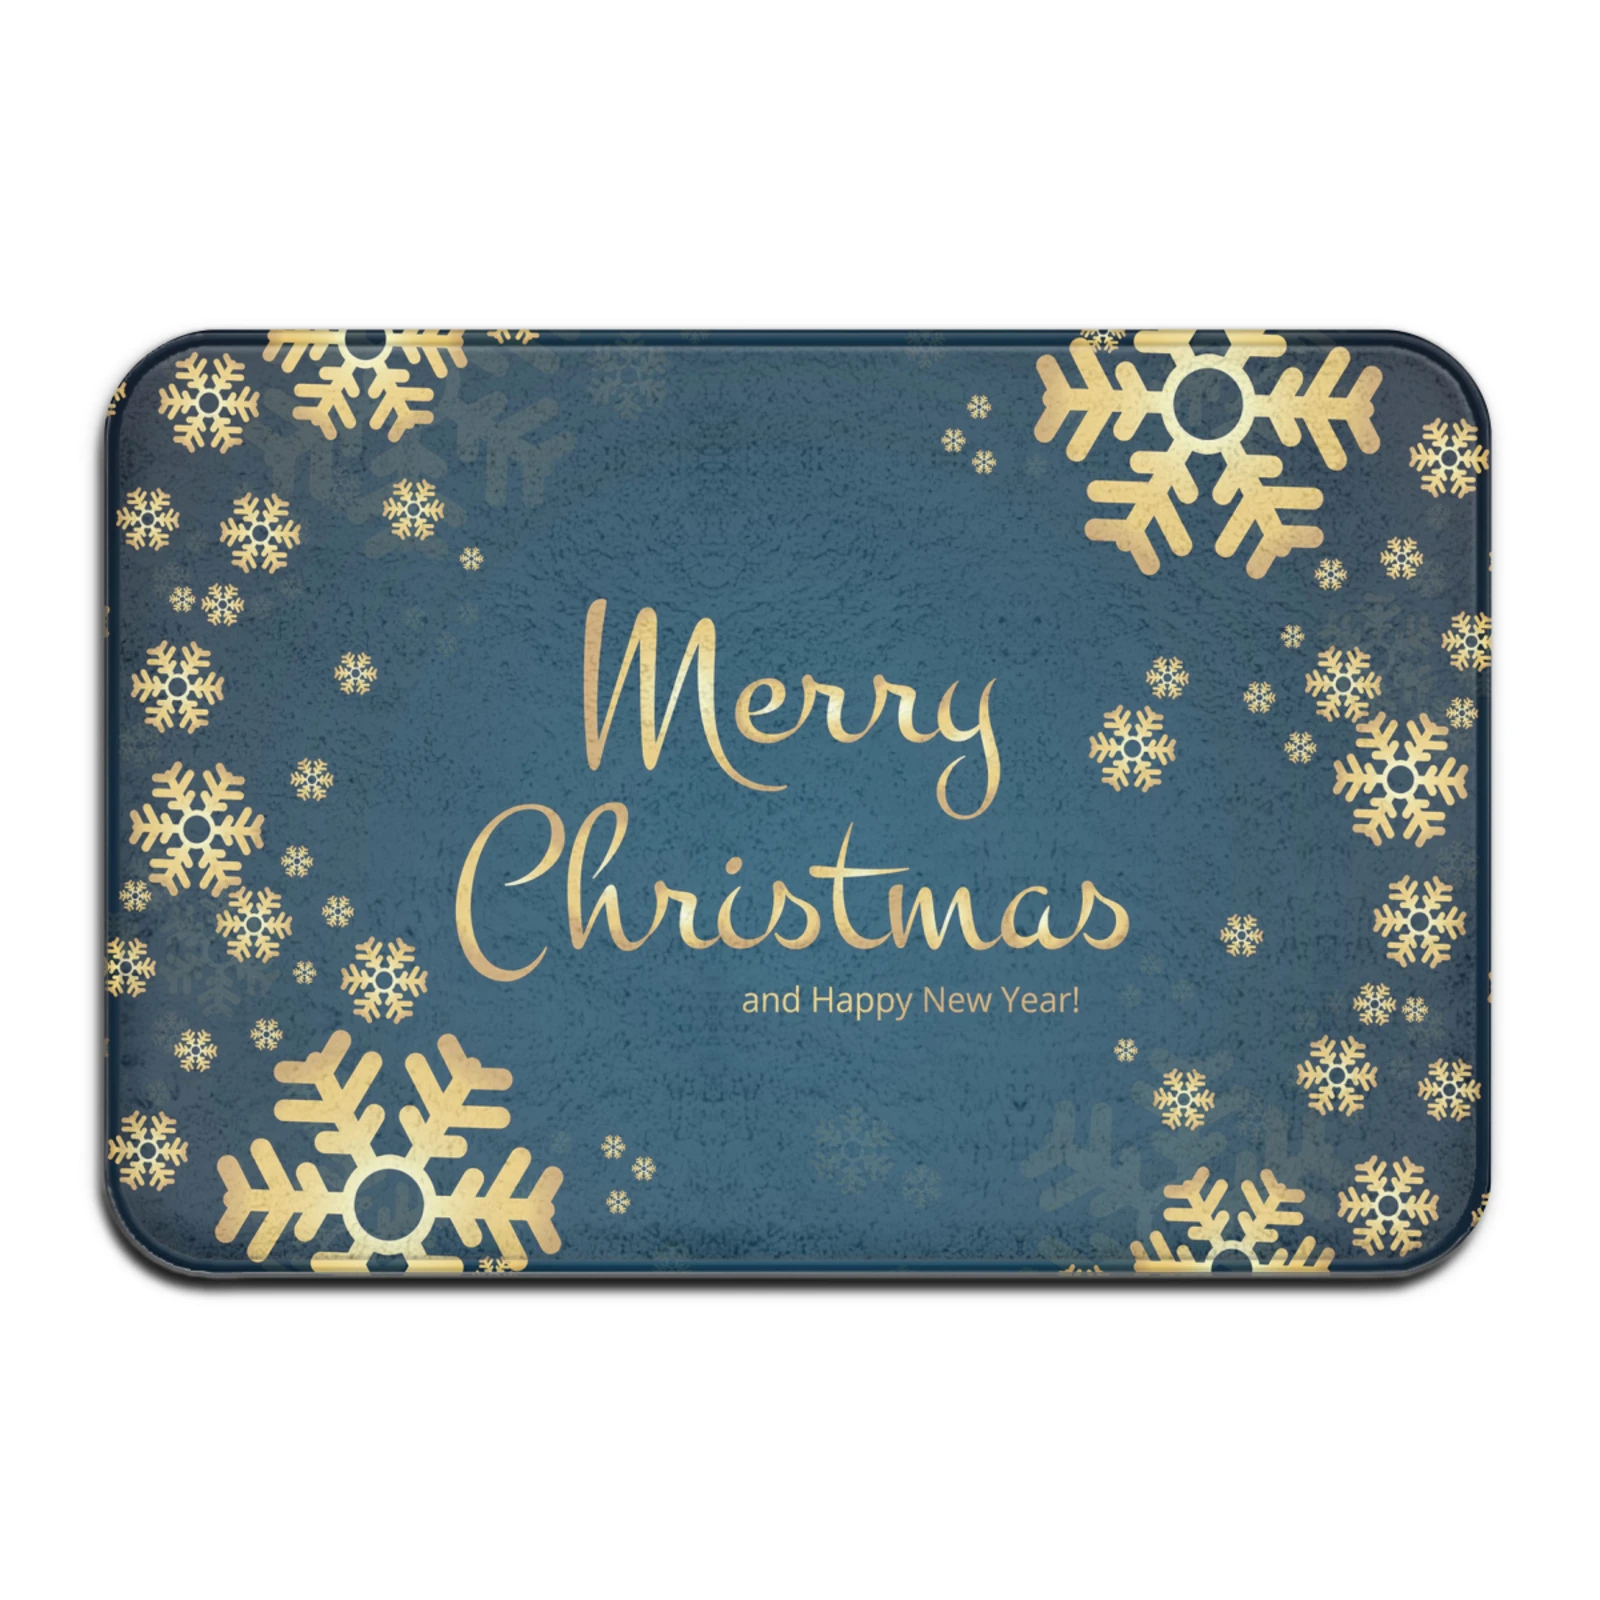 2022 Christmas Mat Outdoor Carpet Doormat Santa Ornament Christmas Decoration for Home Xmas Navidad Deco Noel New Year Supplies